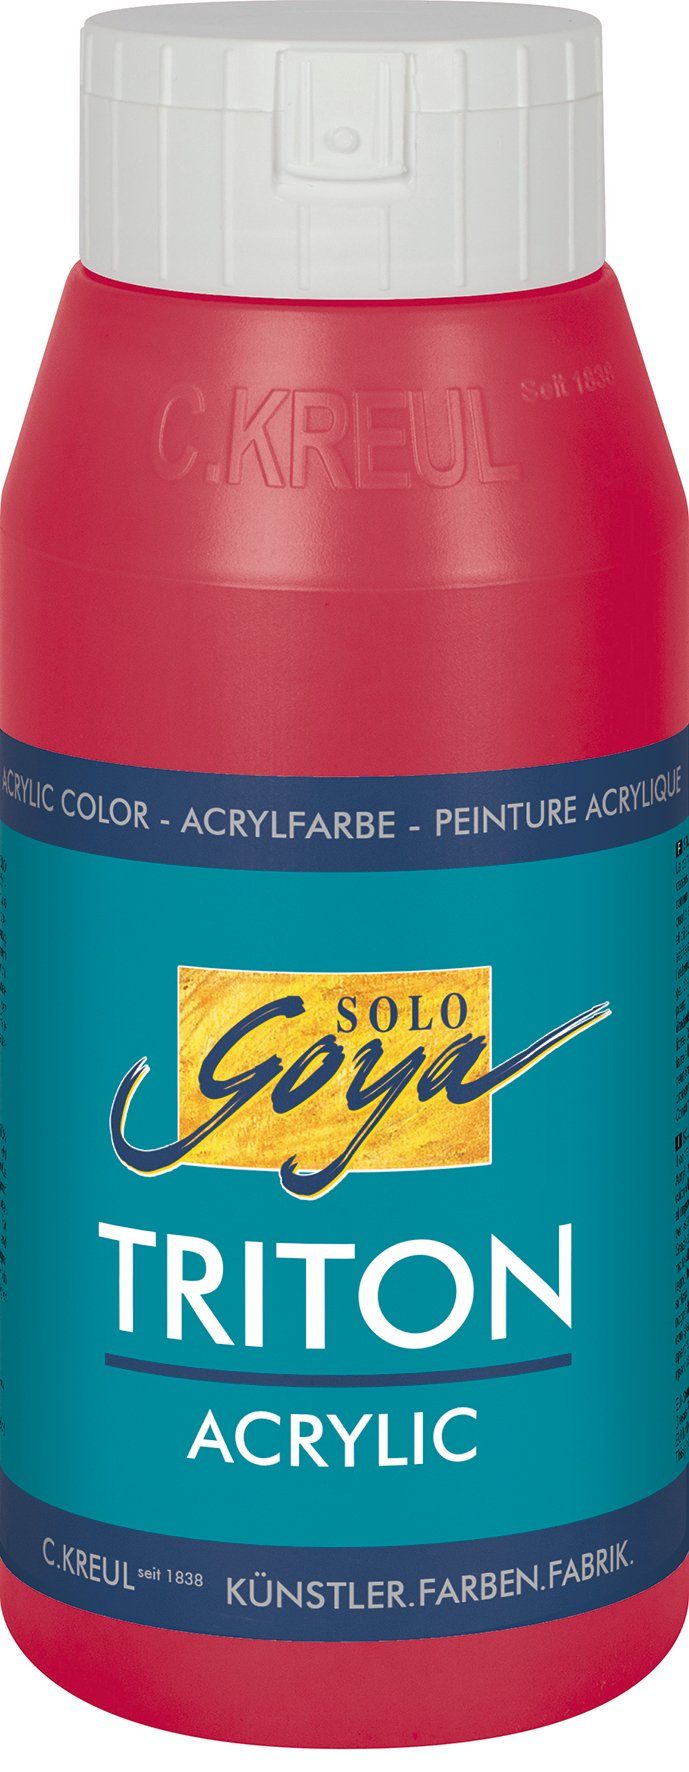 Kreul 750 Solo Magenta ml Acrylic, Goya Triton Acrylfarbe